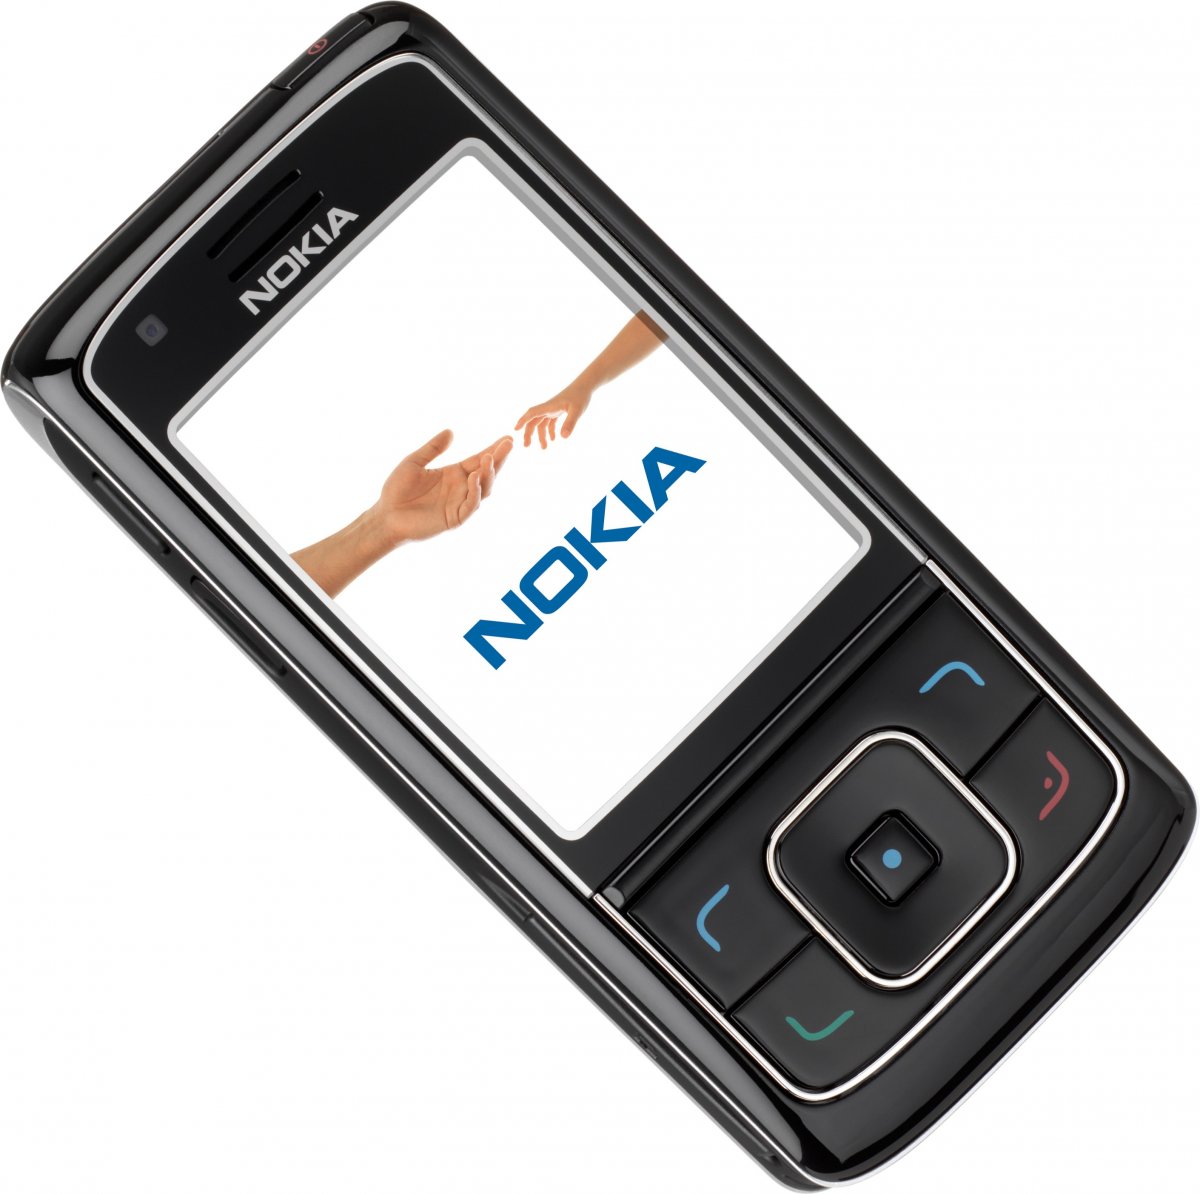 Nokia e65-1